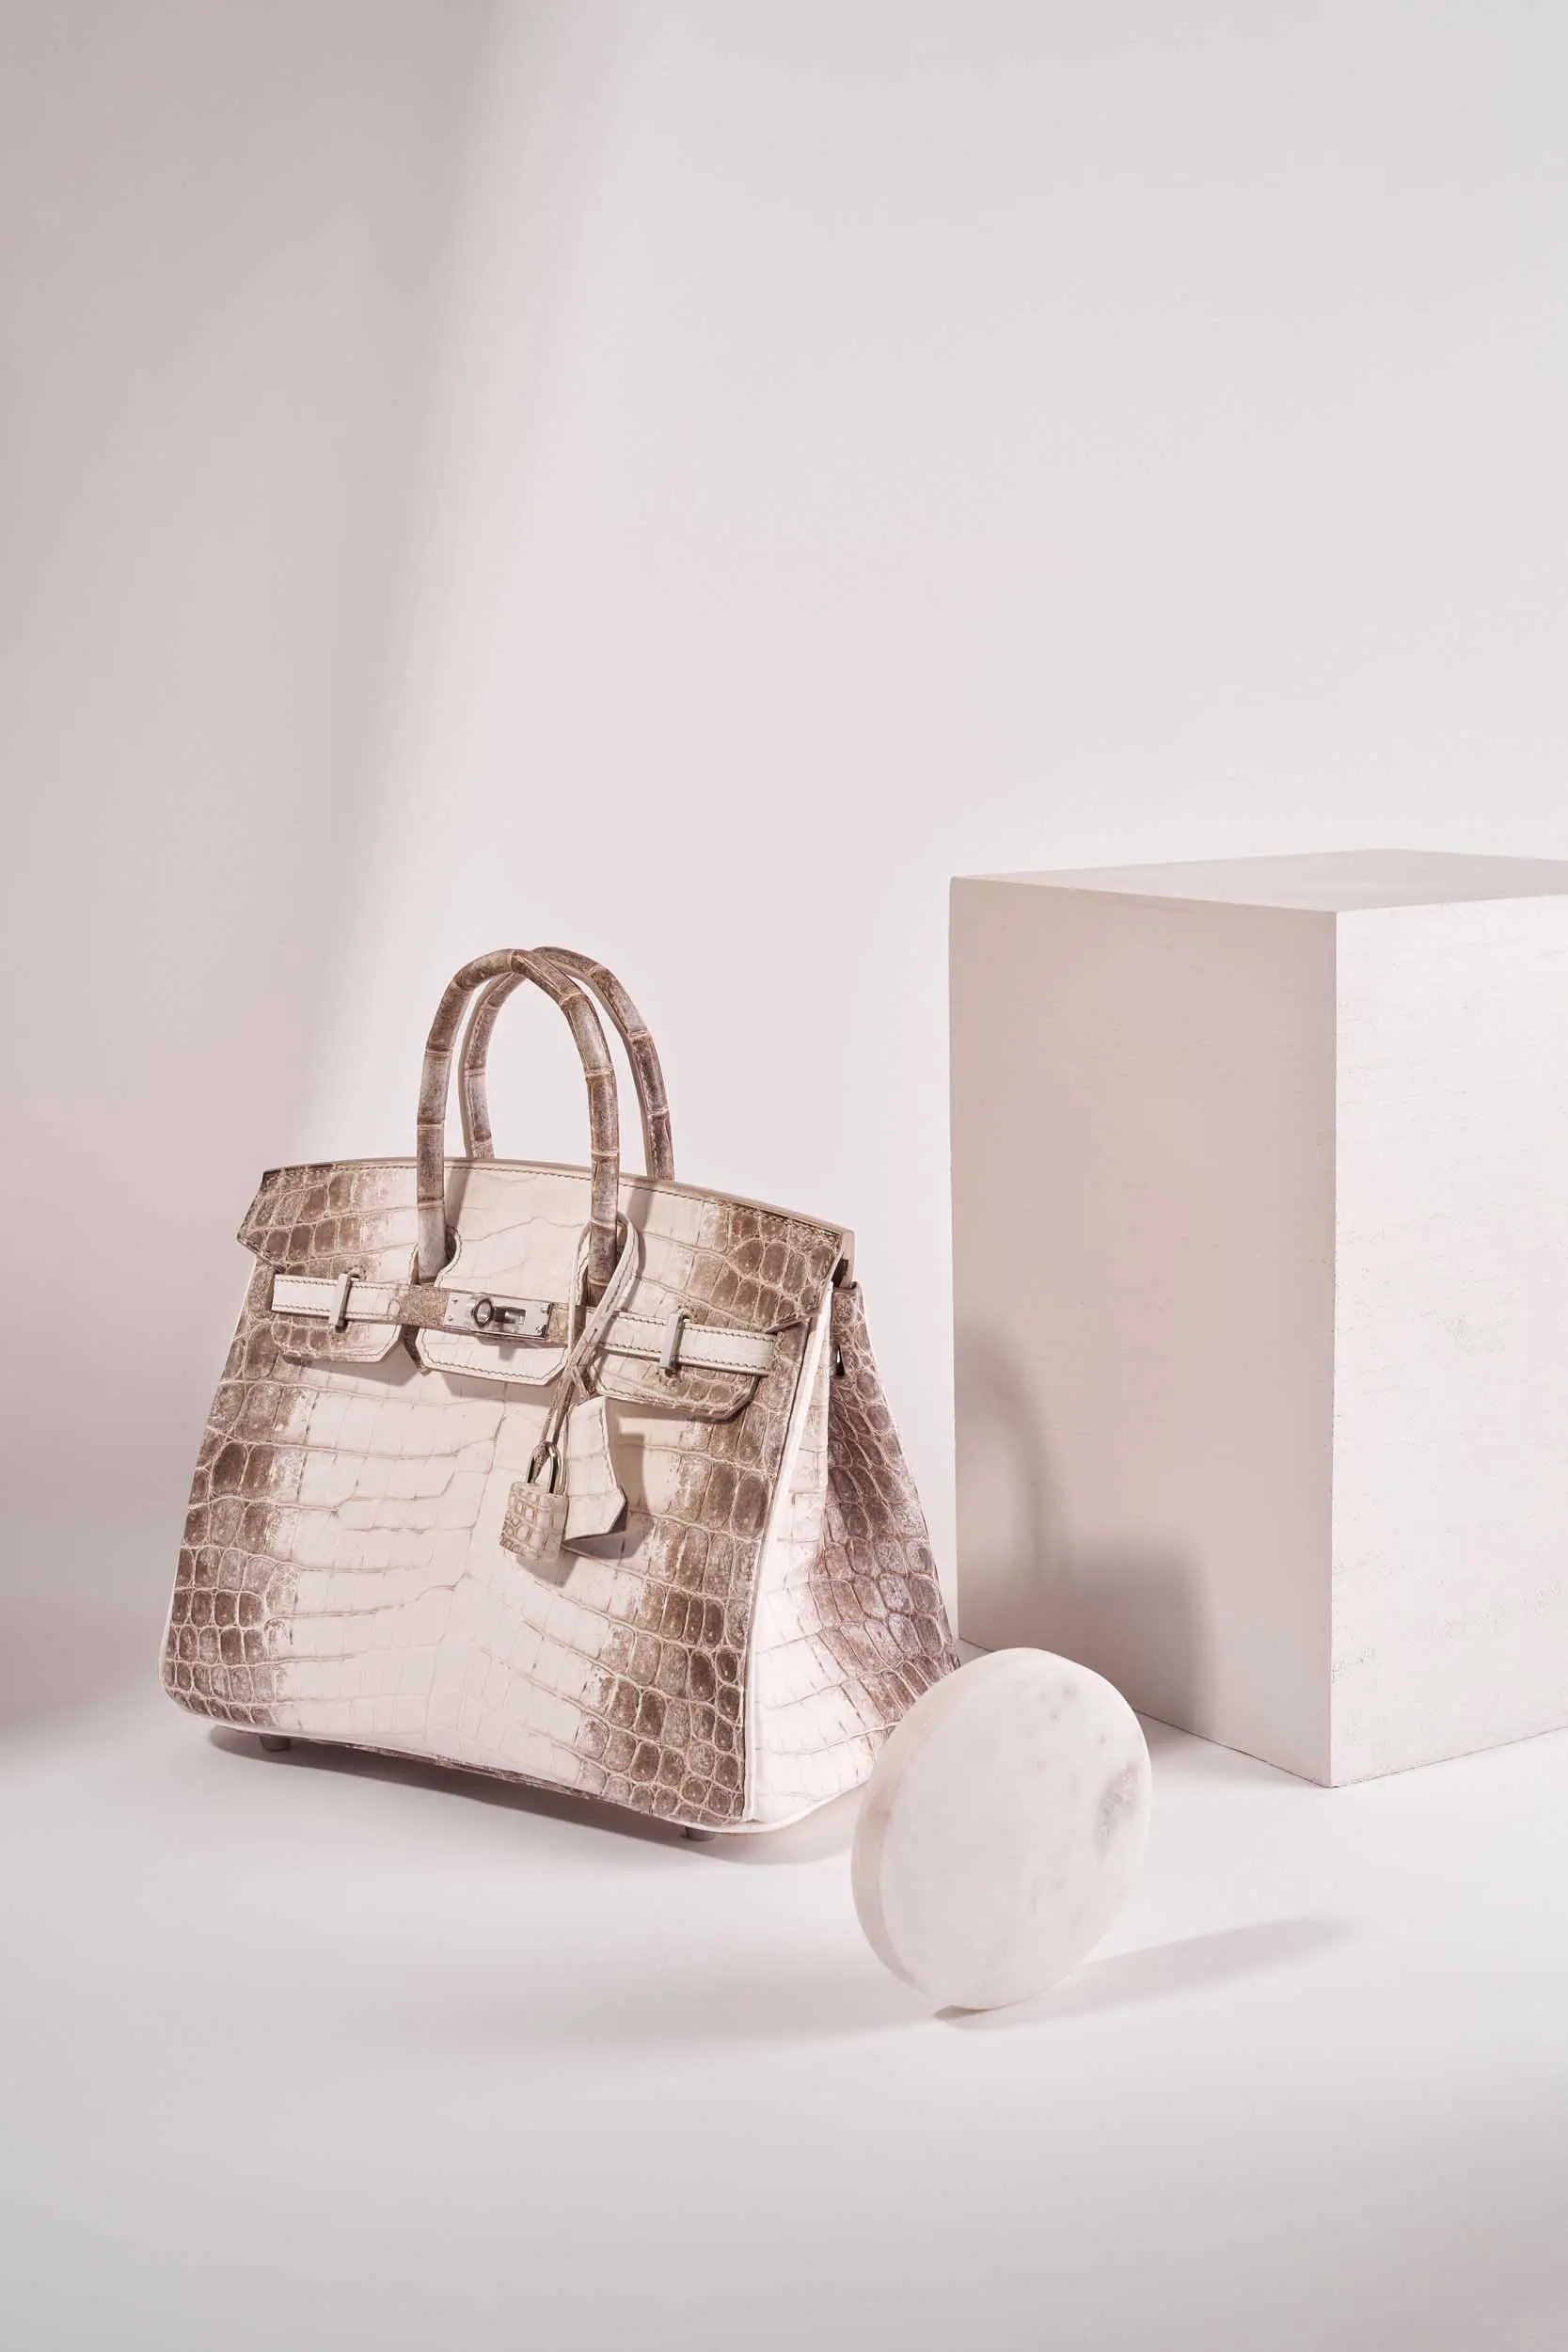 Hermes Limited Edition Birkin 20 Sellier Bag Neige (Snow) White